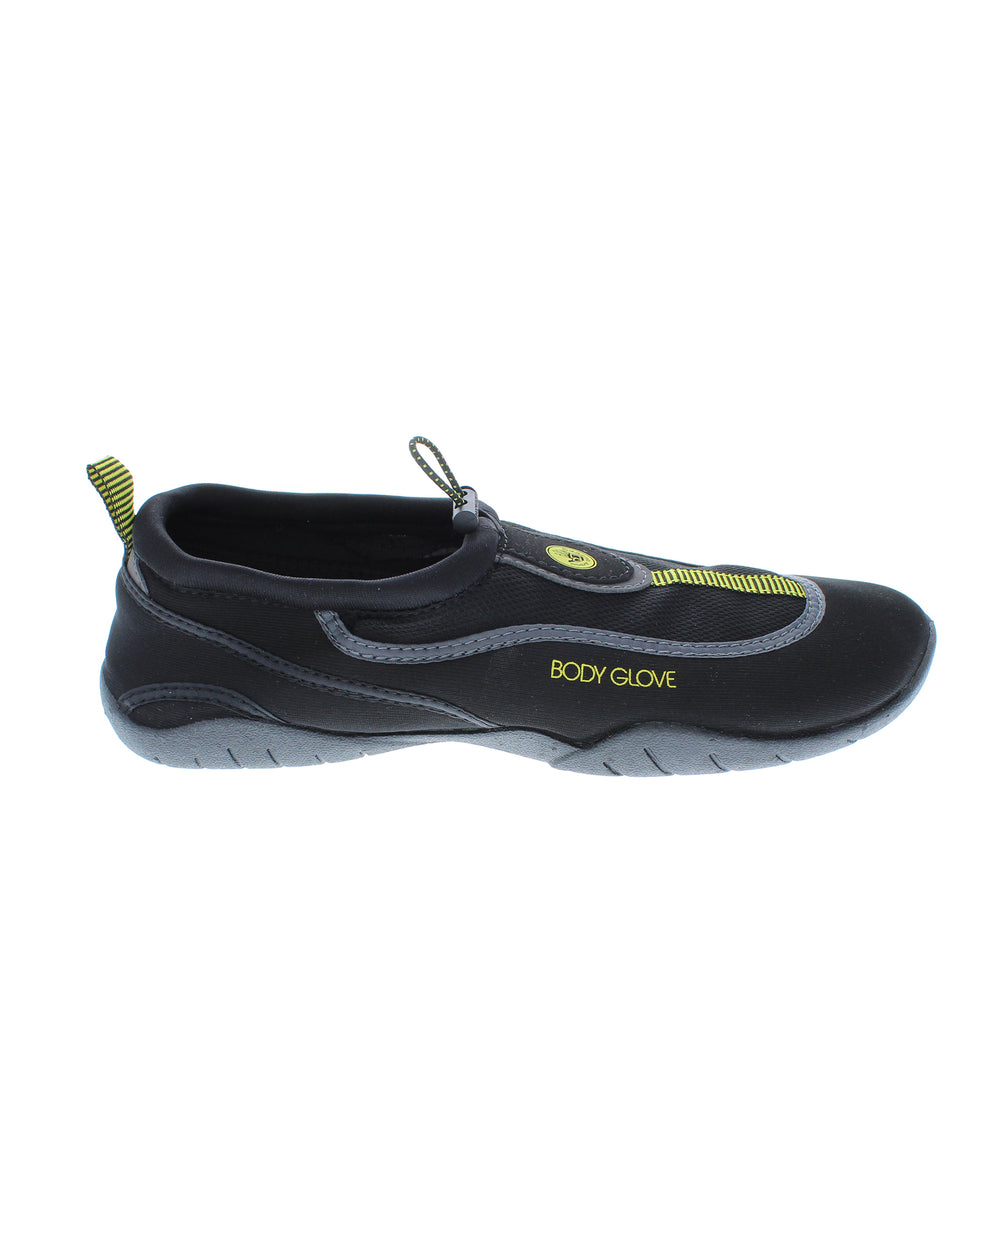 Men's Riptide III Water Shoes - Black/Yellow